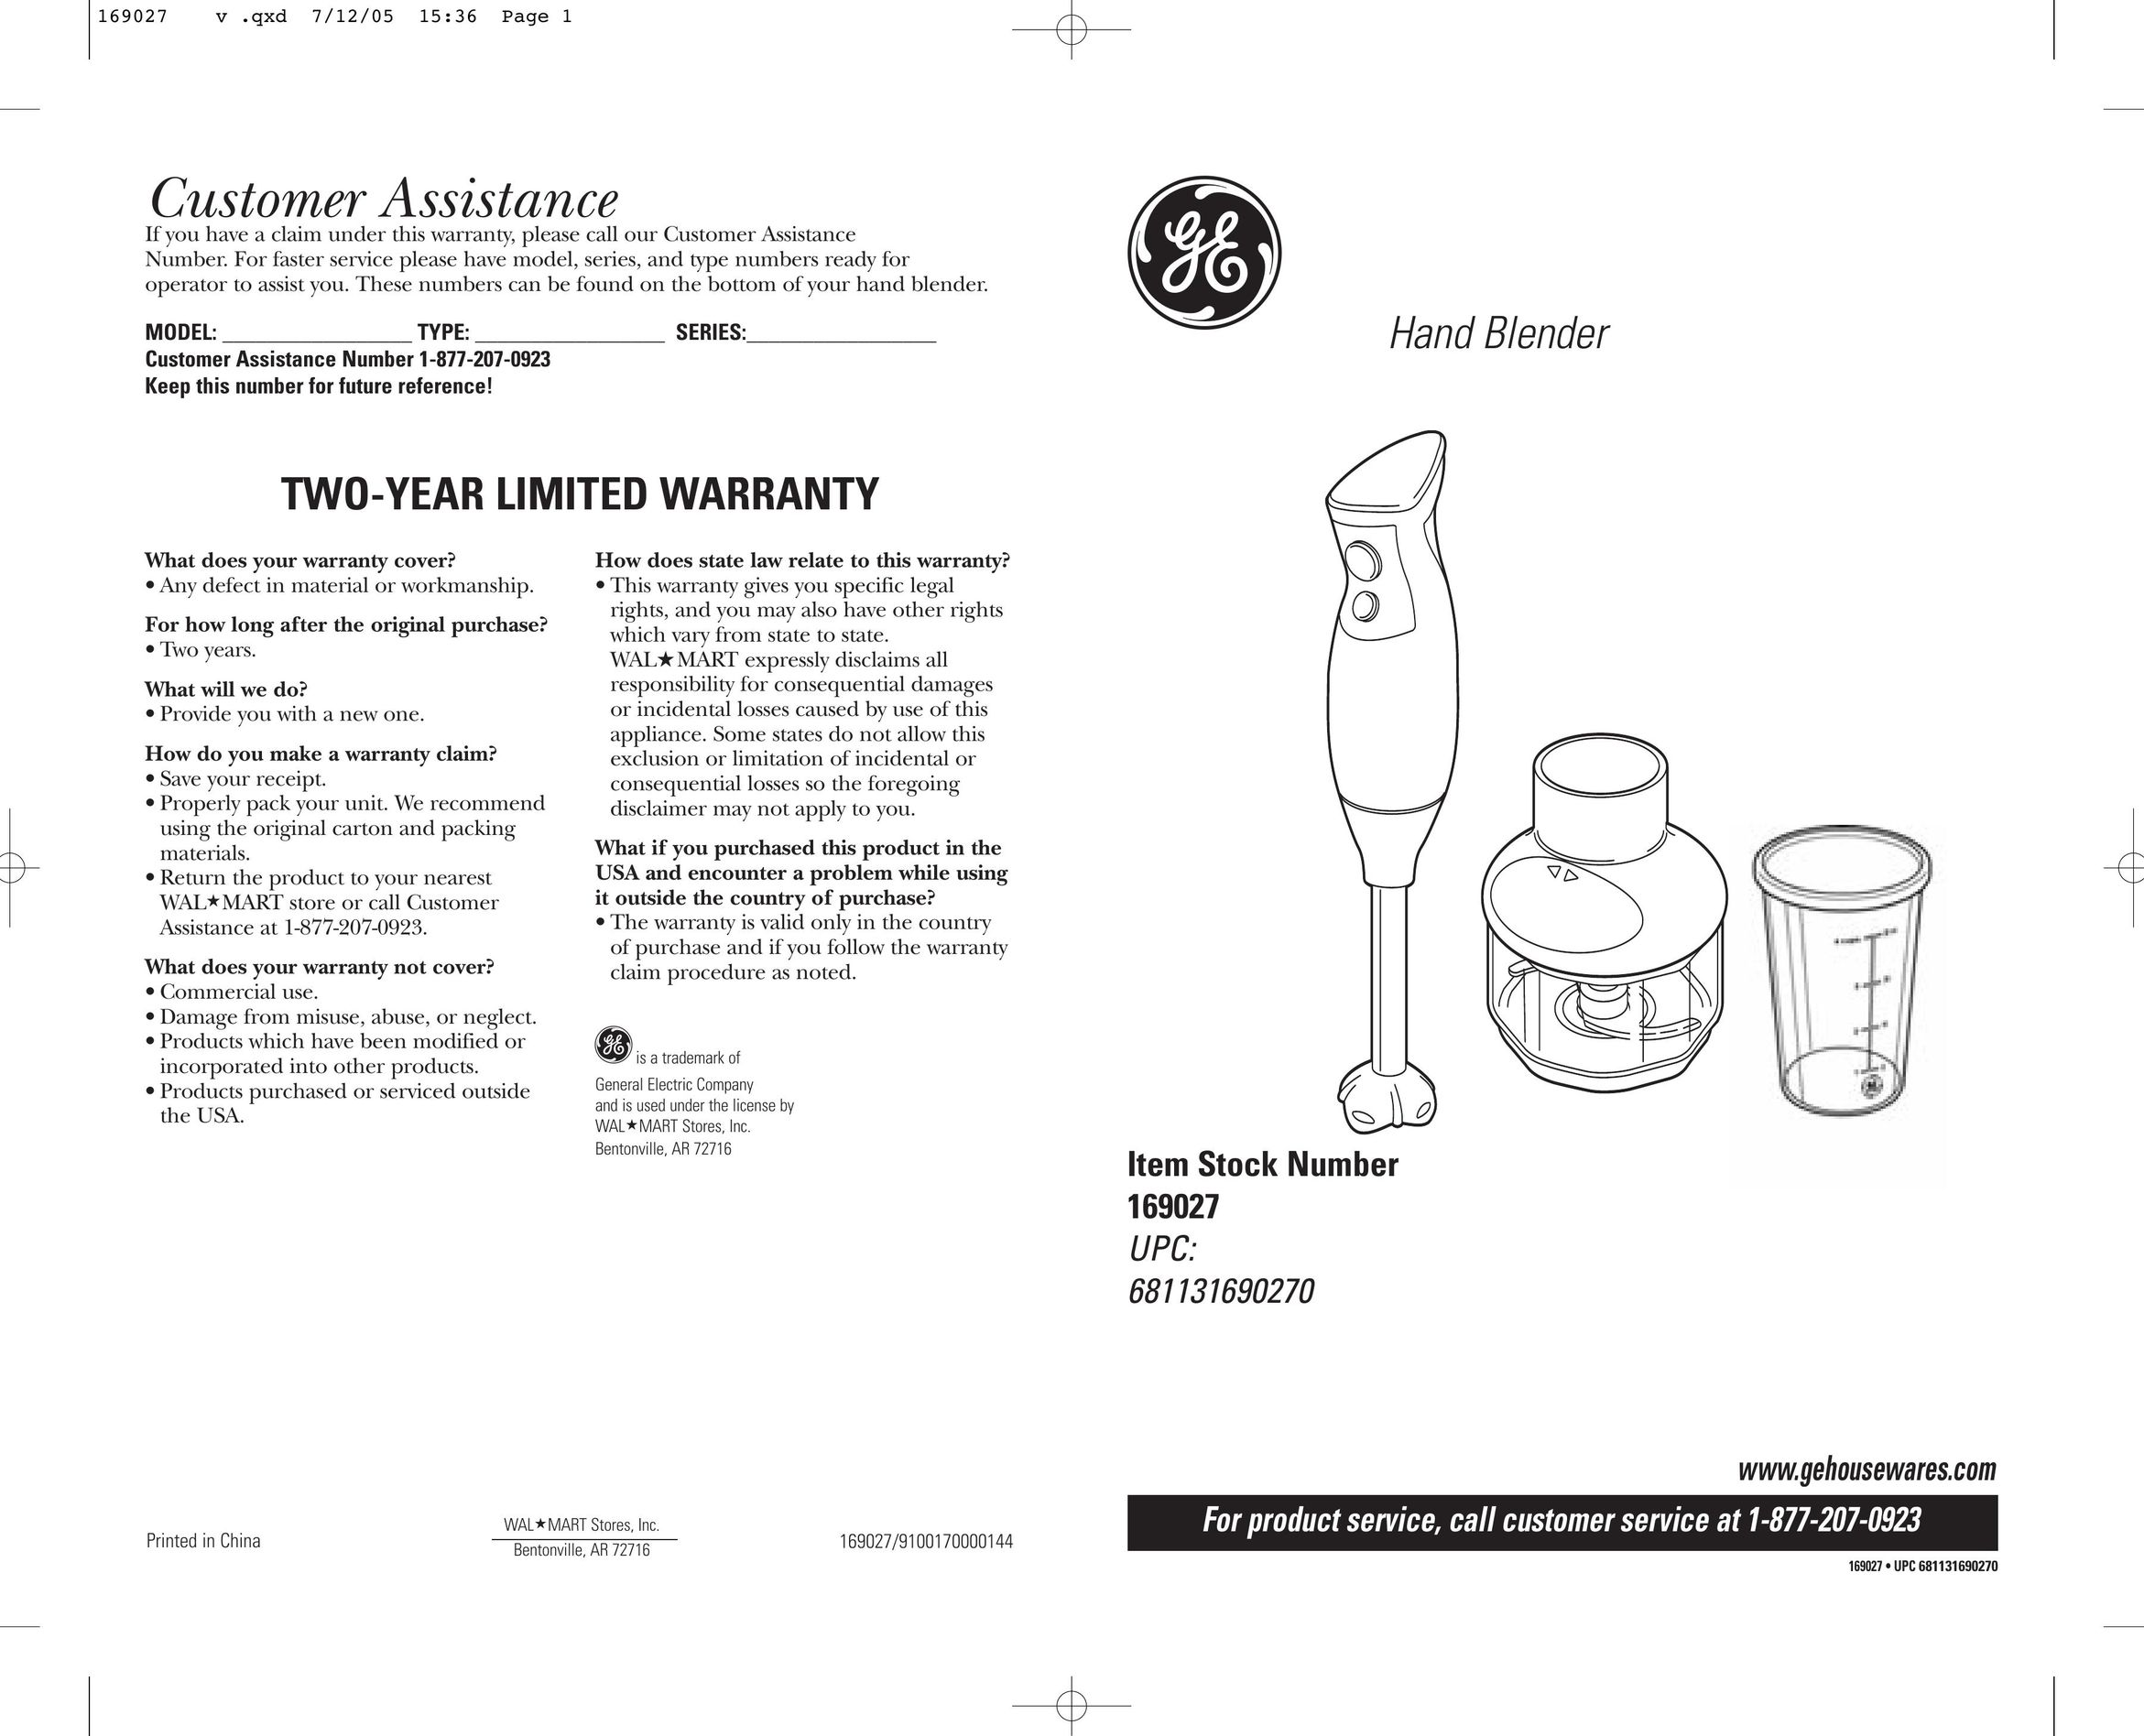 GE 681131690270 Blender User Manual